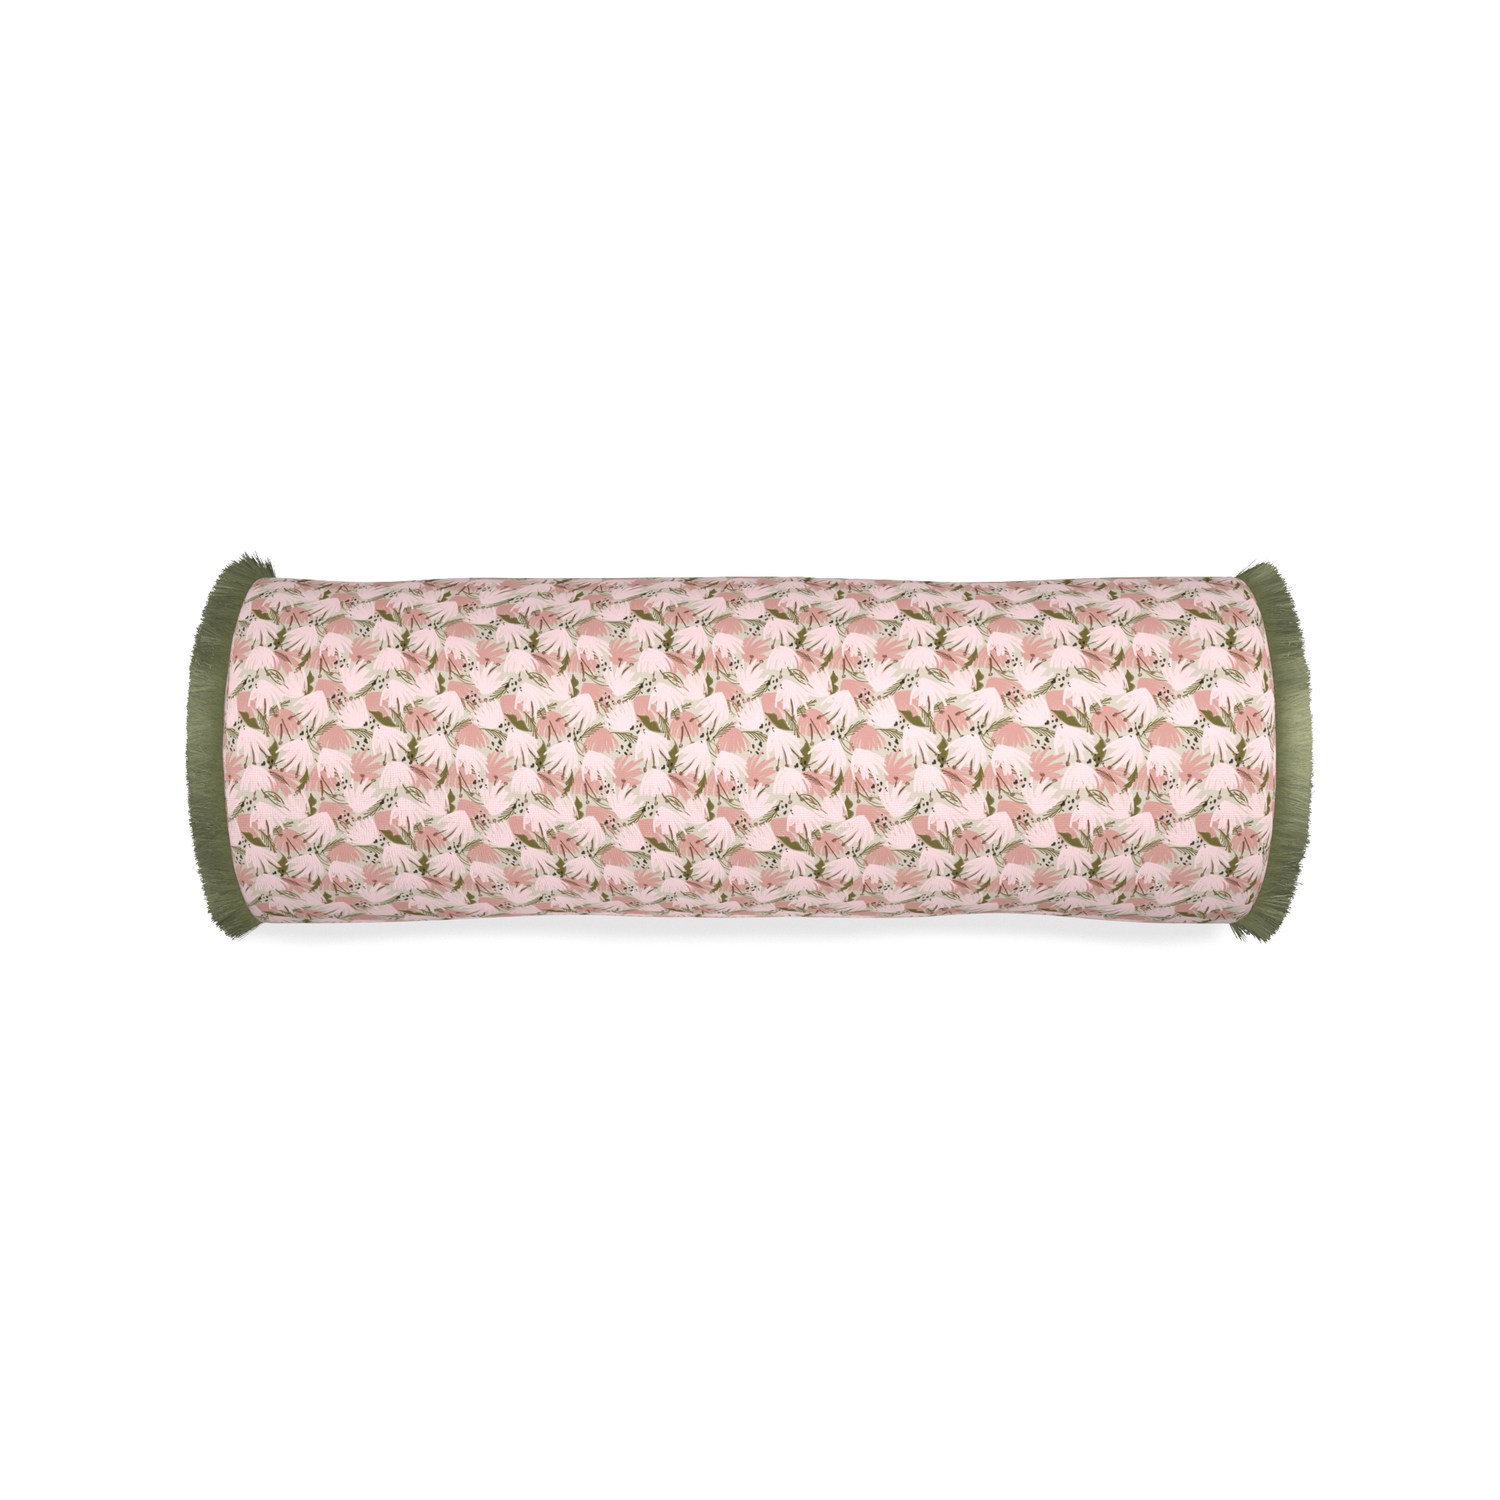 Bolster eden pink custom pillow with sage fringe on white background